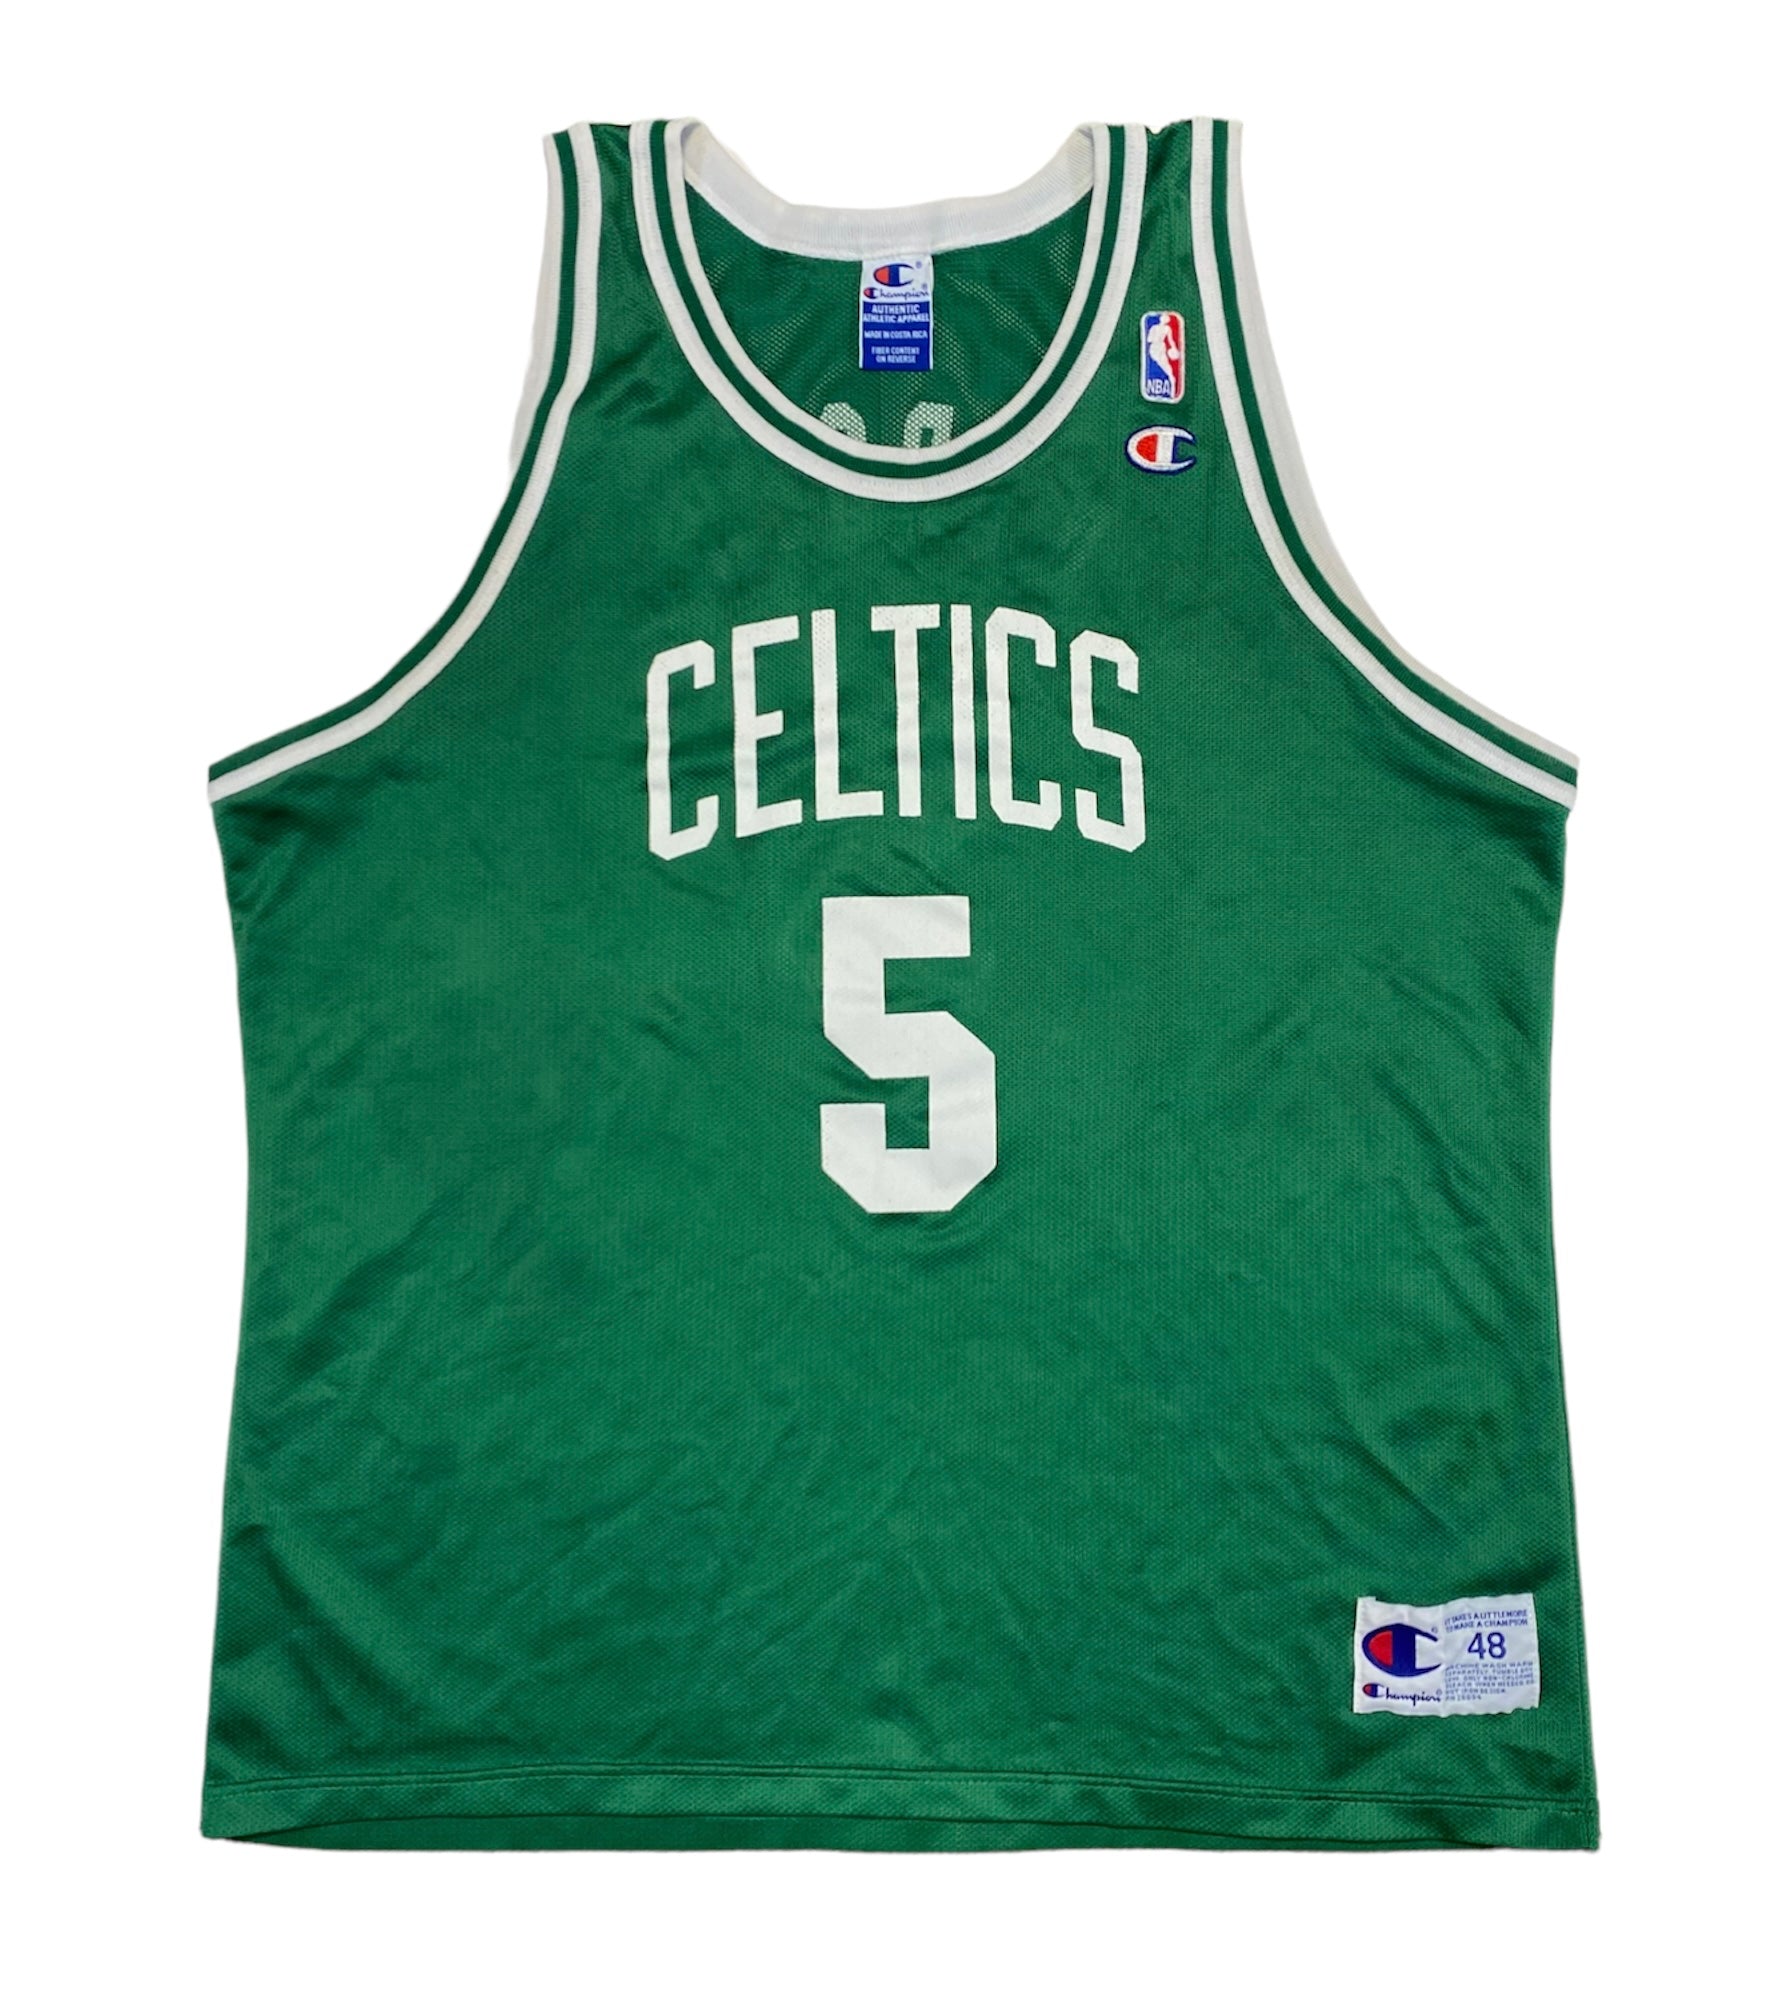 Boston Celtics NBA Basketball Team Champions Sweatshirt